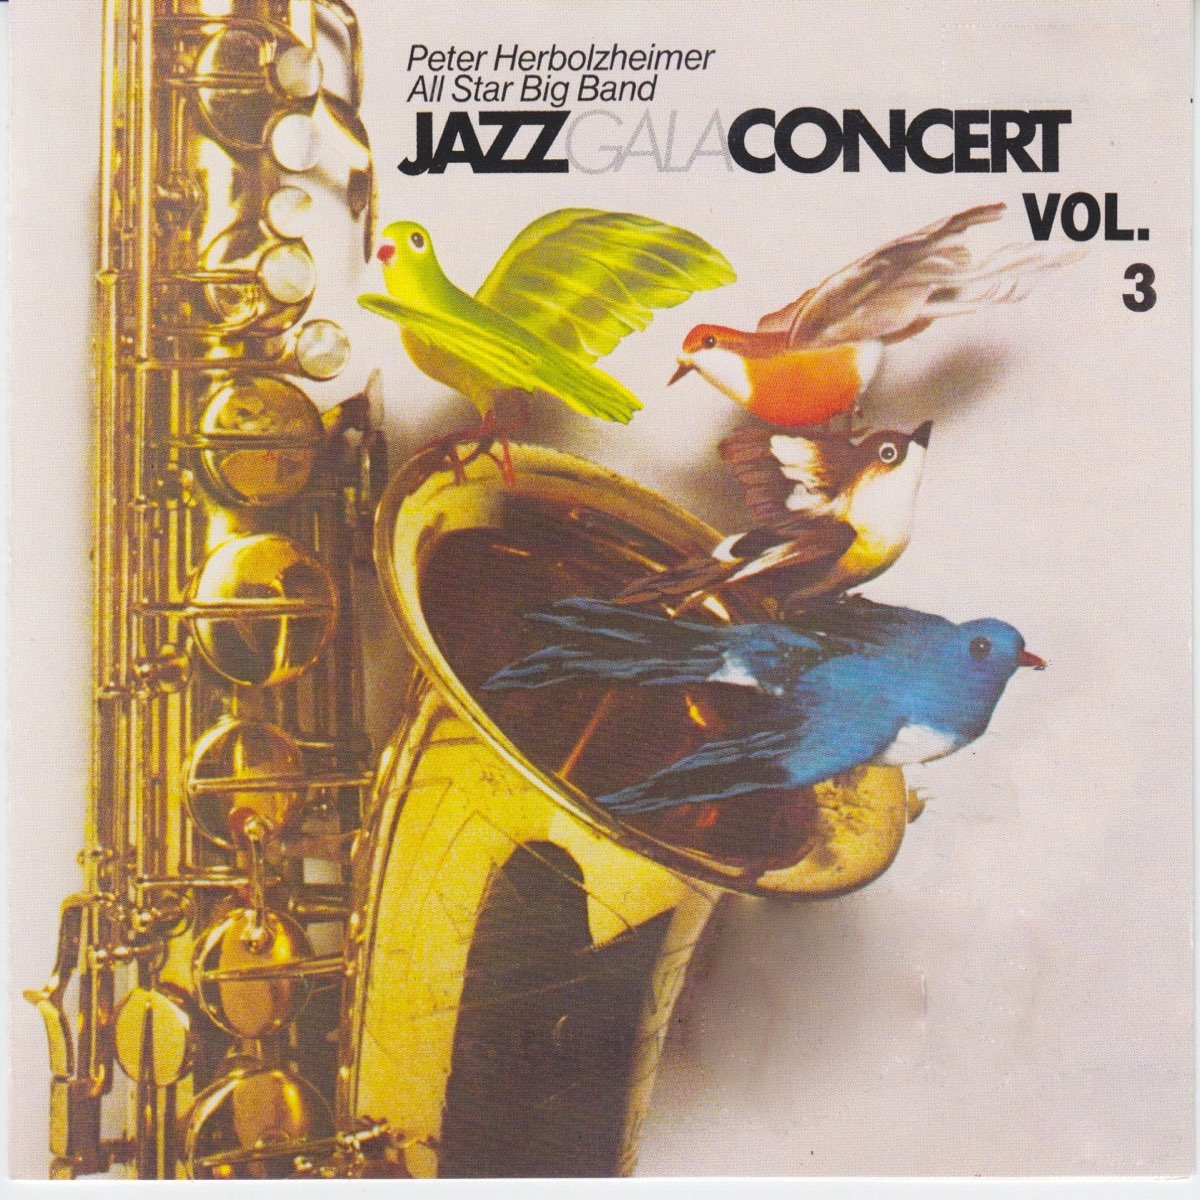 Jazz Gala Concert, Vol.3 (Peter Herbolzheimer All Star Big Band) by Peter  Herbolzheimer Rhythm Combination & Brass on Apple Music